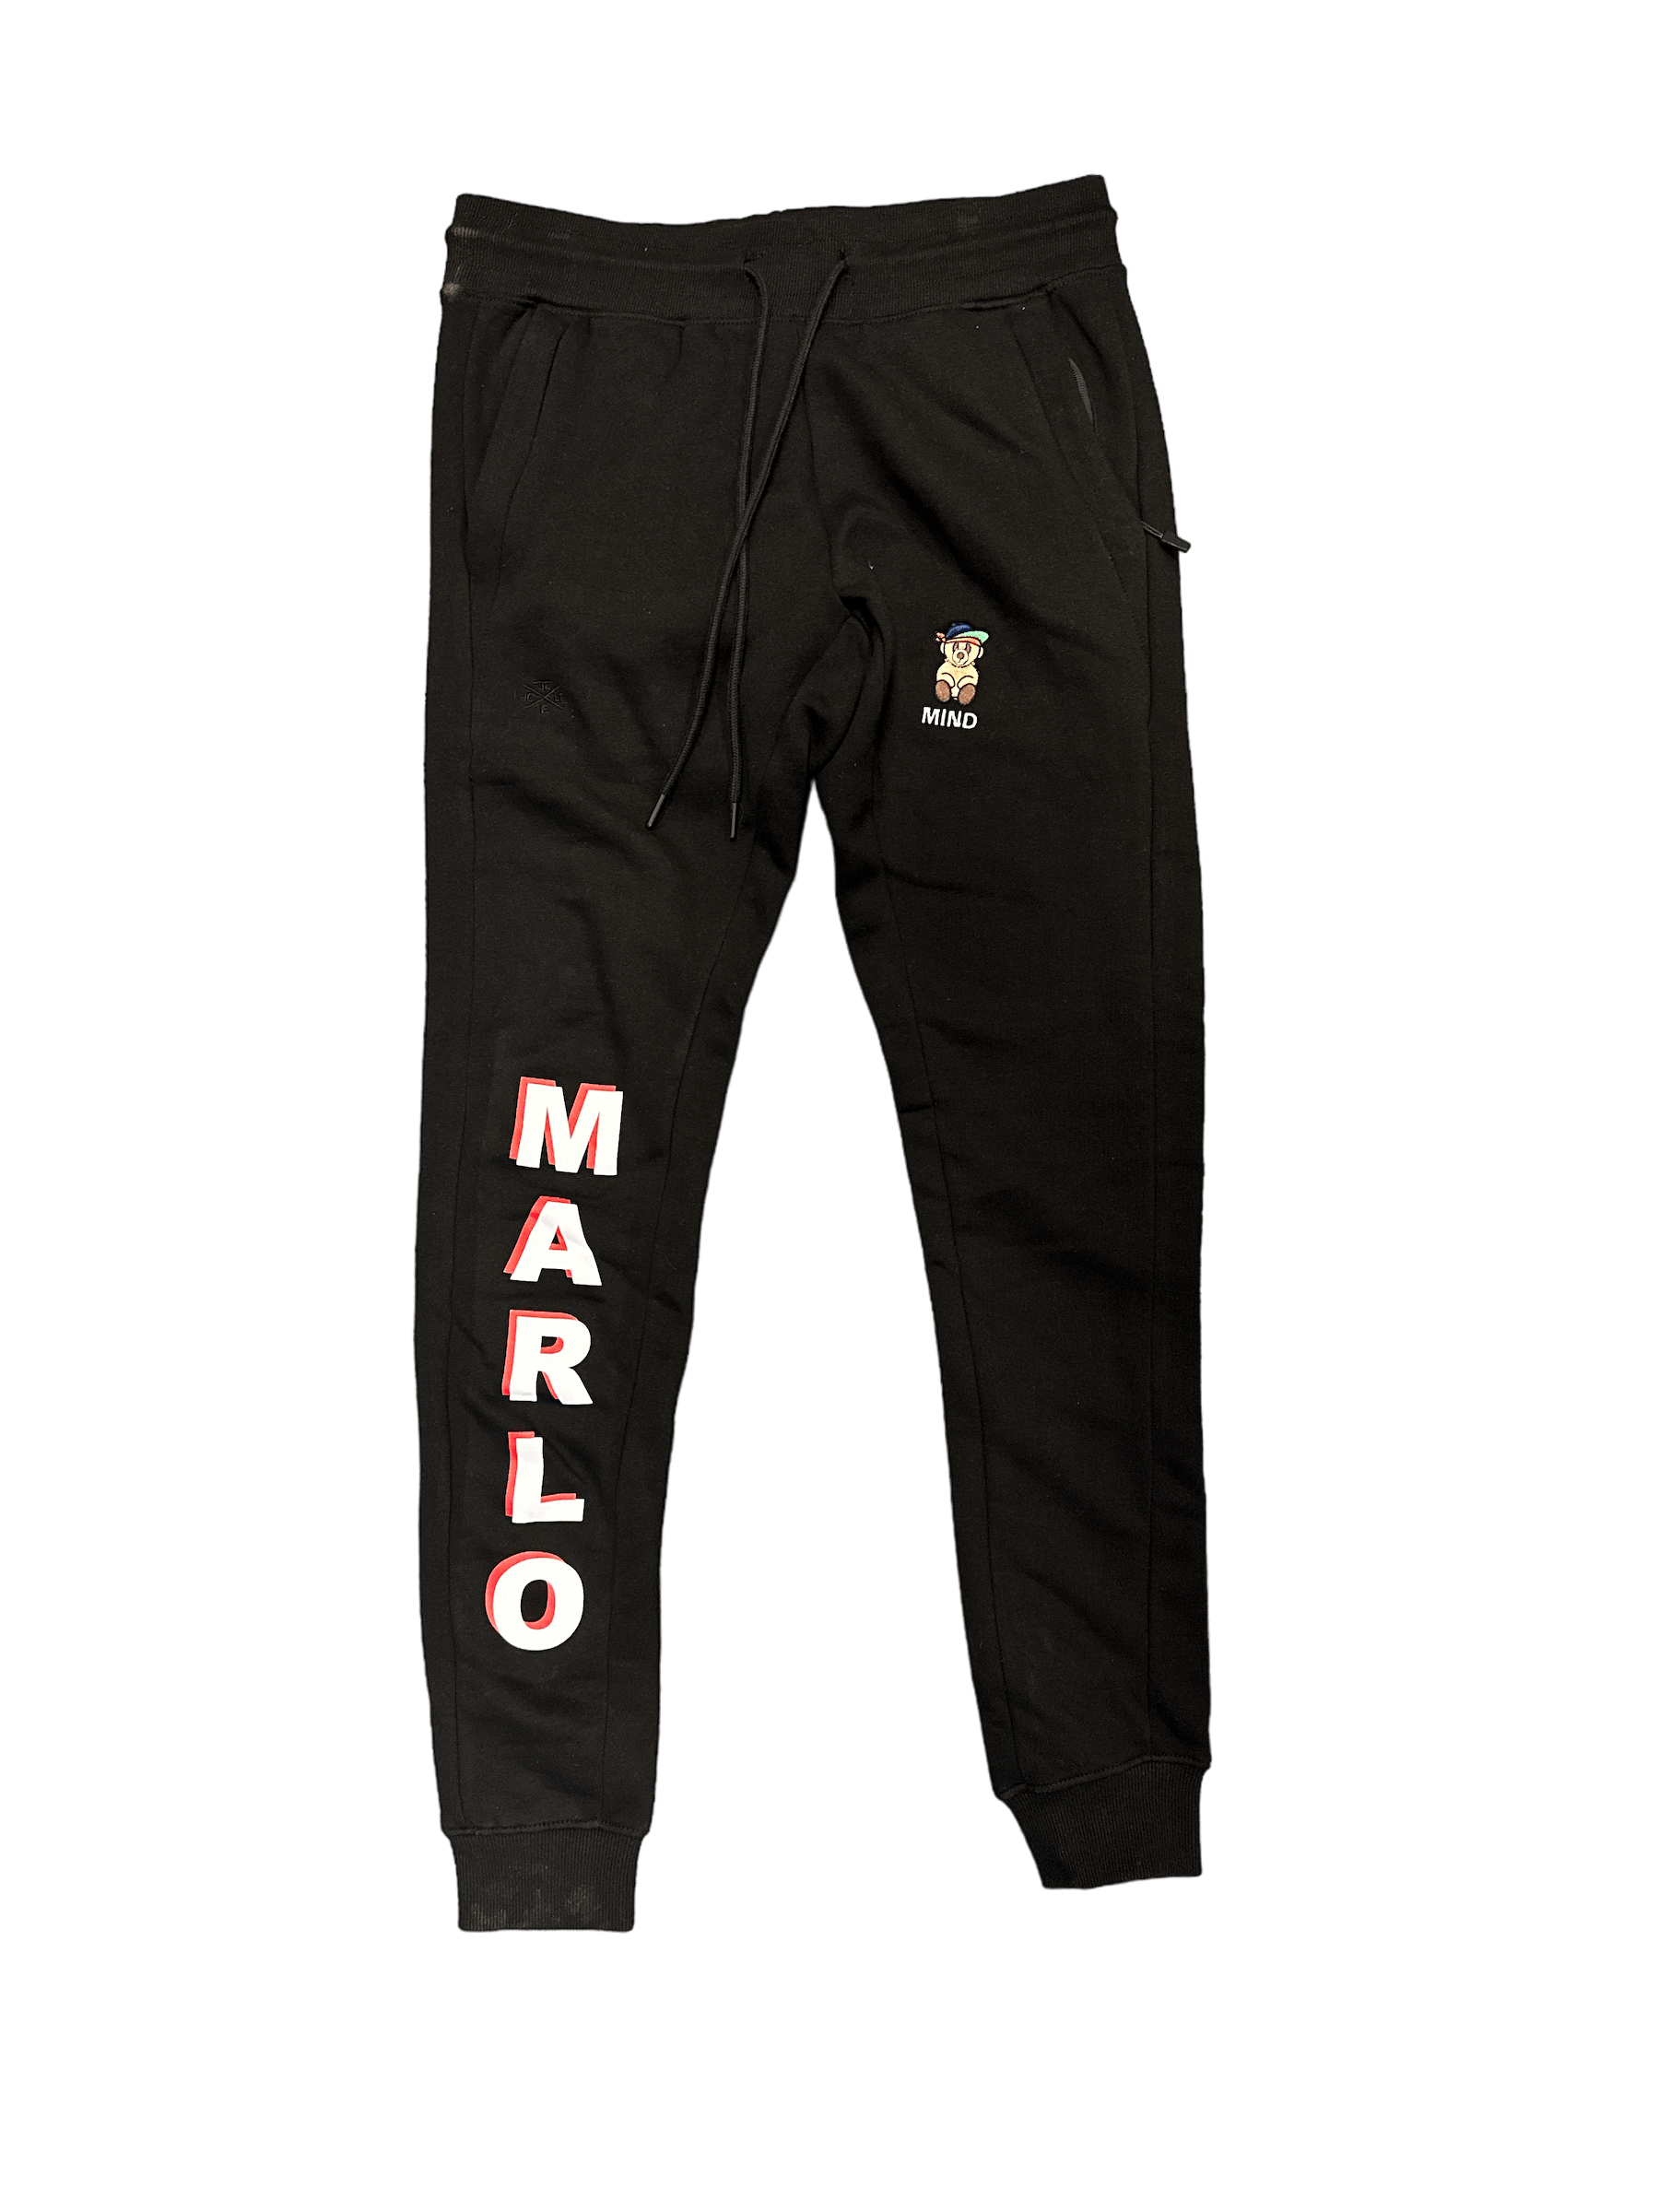 Mastermind315 Marlo Falcon sweatpants